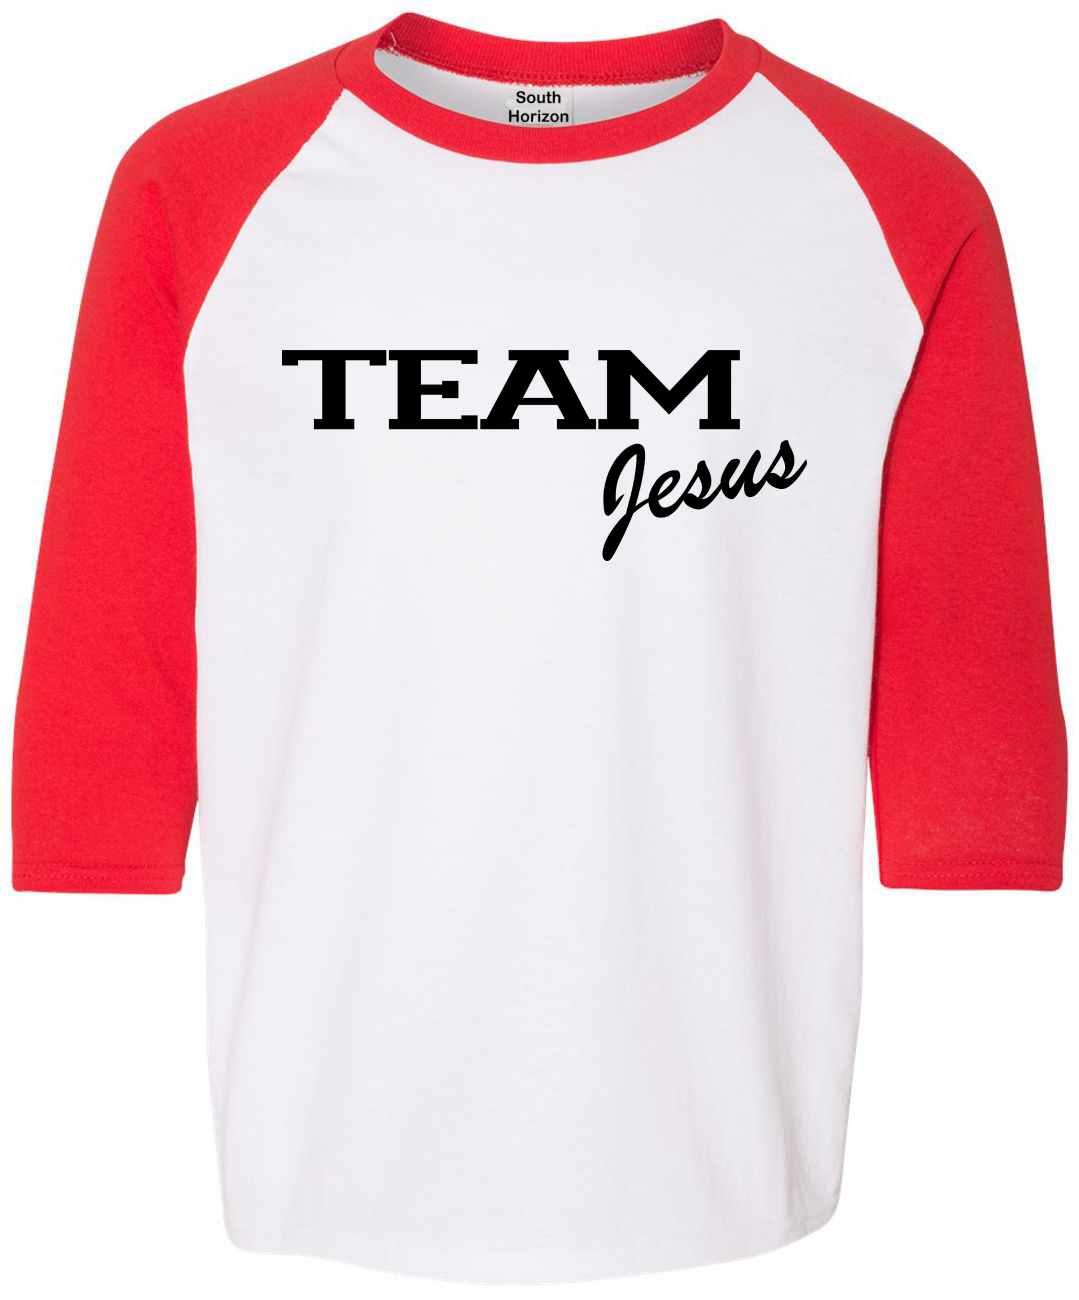 TEAM Jesus on Youth Baseball Shirt